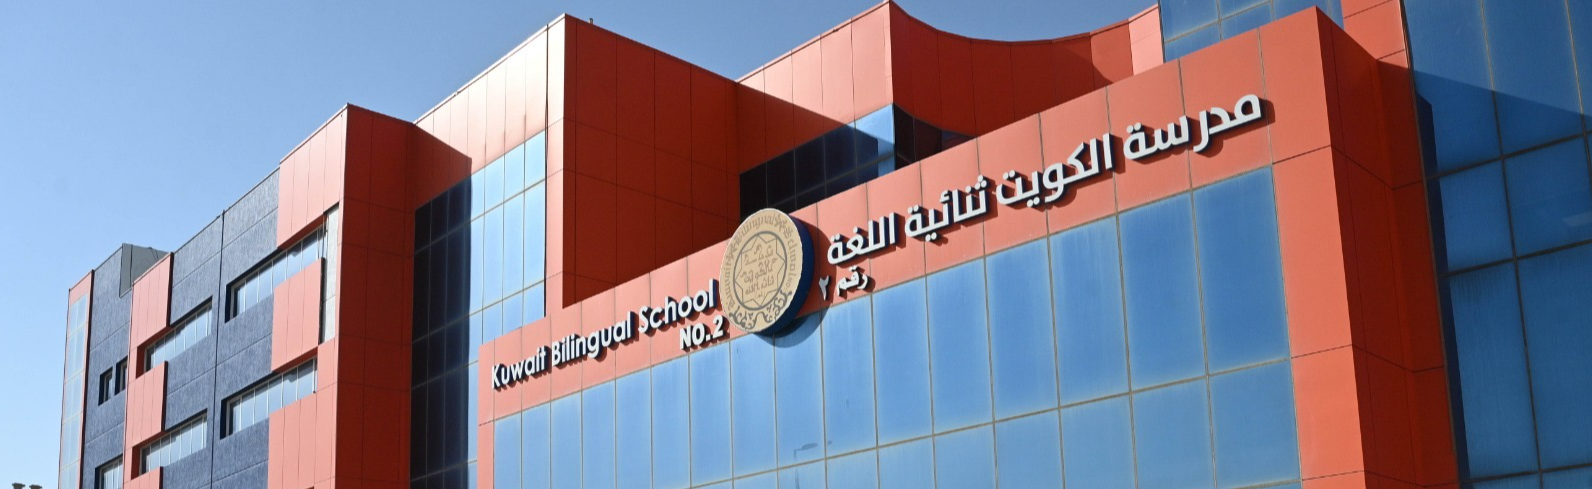 Kuwait Bilingual School Banner